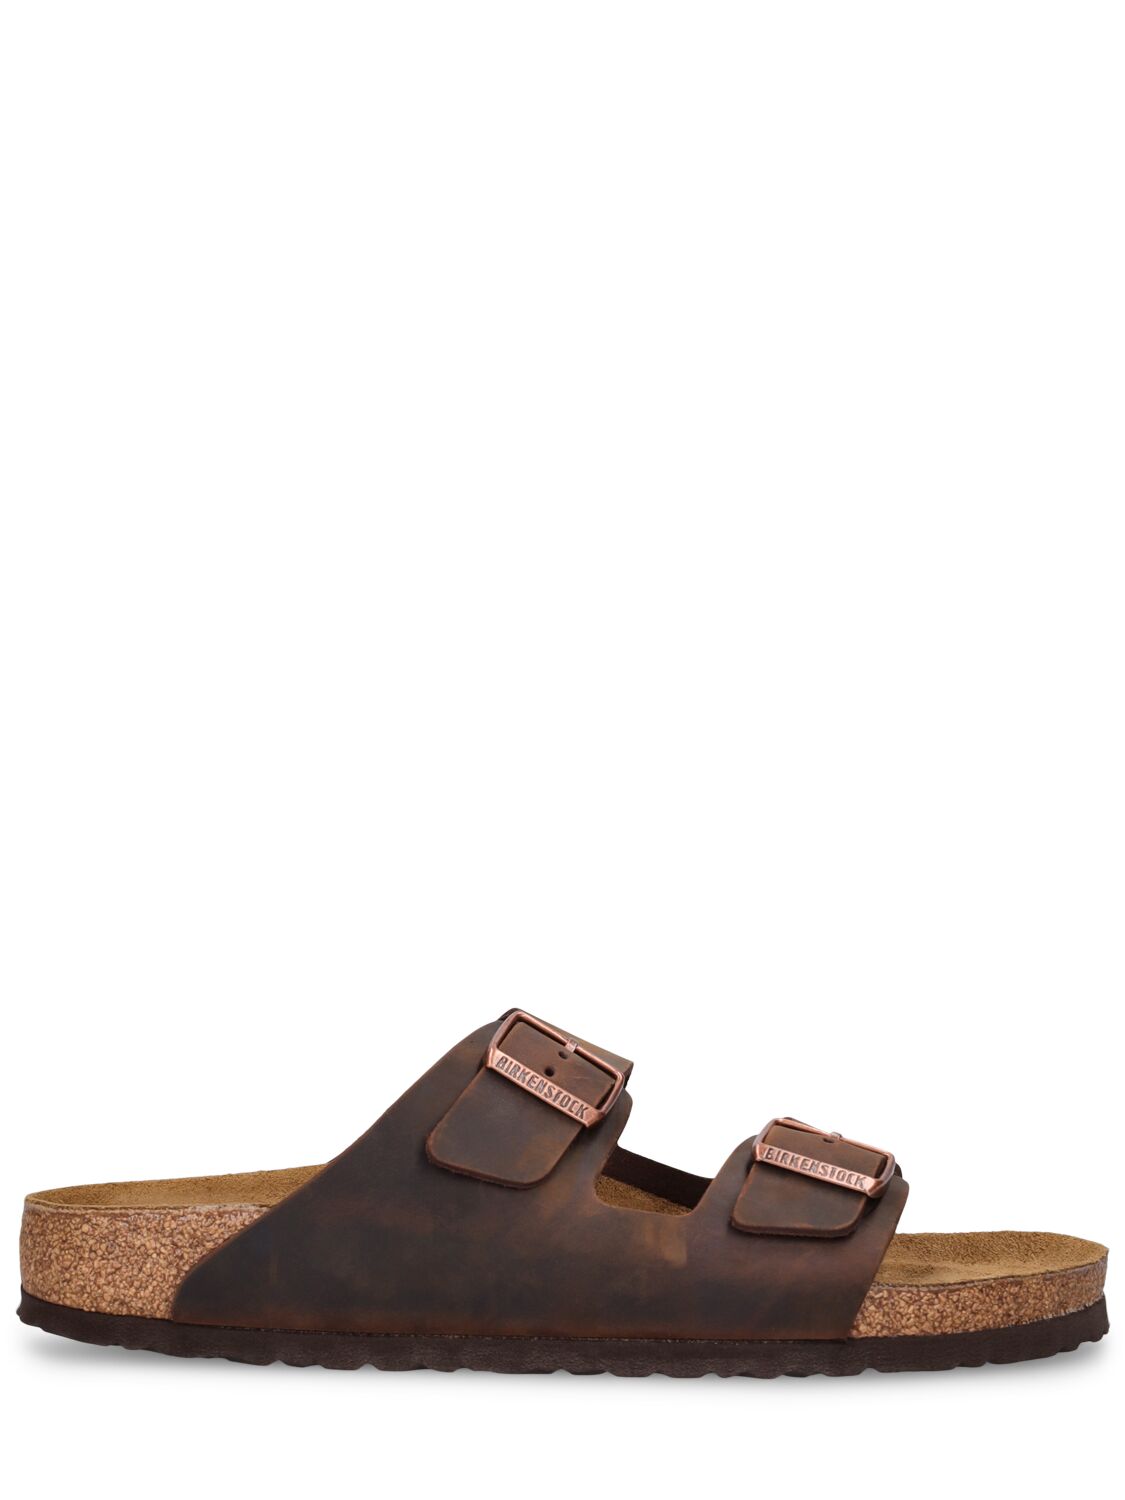 Image of Arizona Oiled Leather Sandals